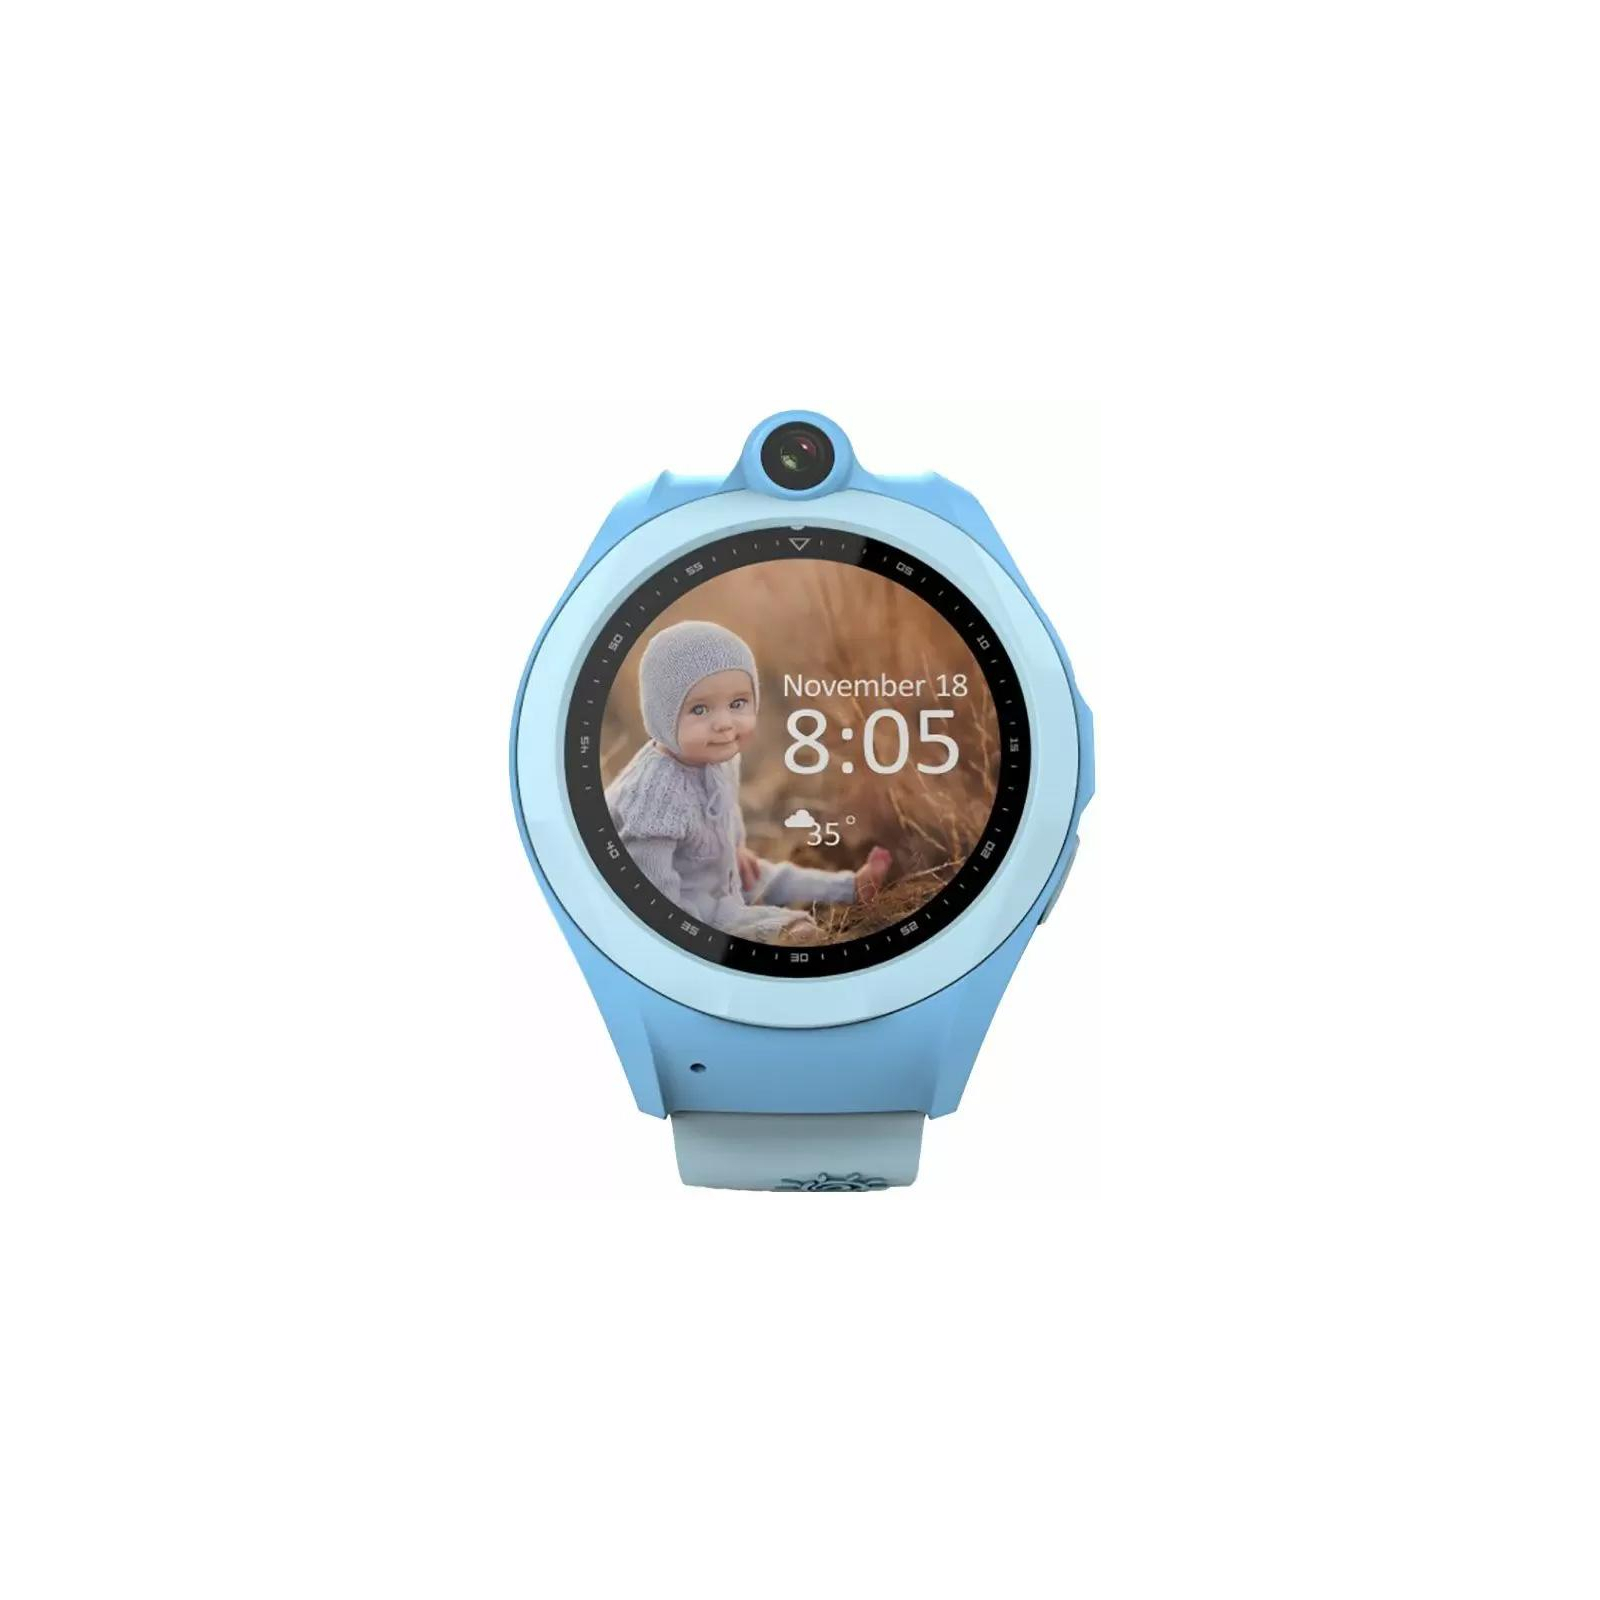 Смарт-часы UWatch Q610 Kid smart watch Pink (F_52920) изображение 2